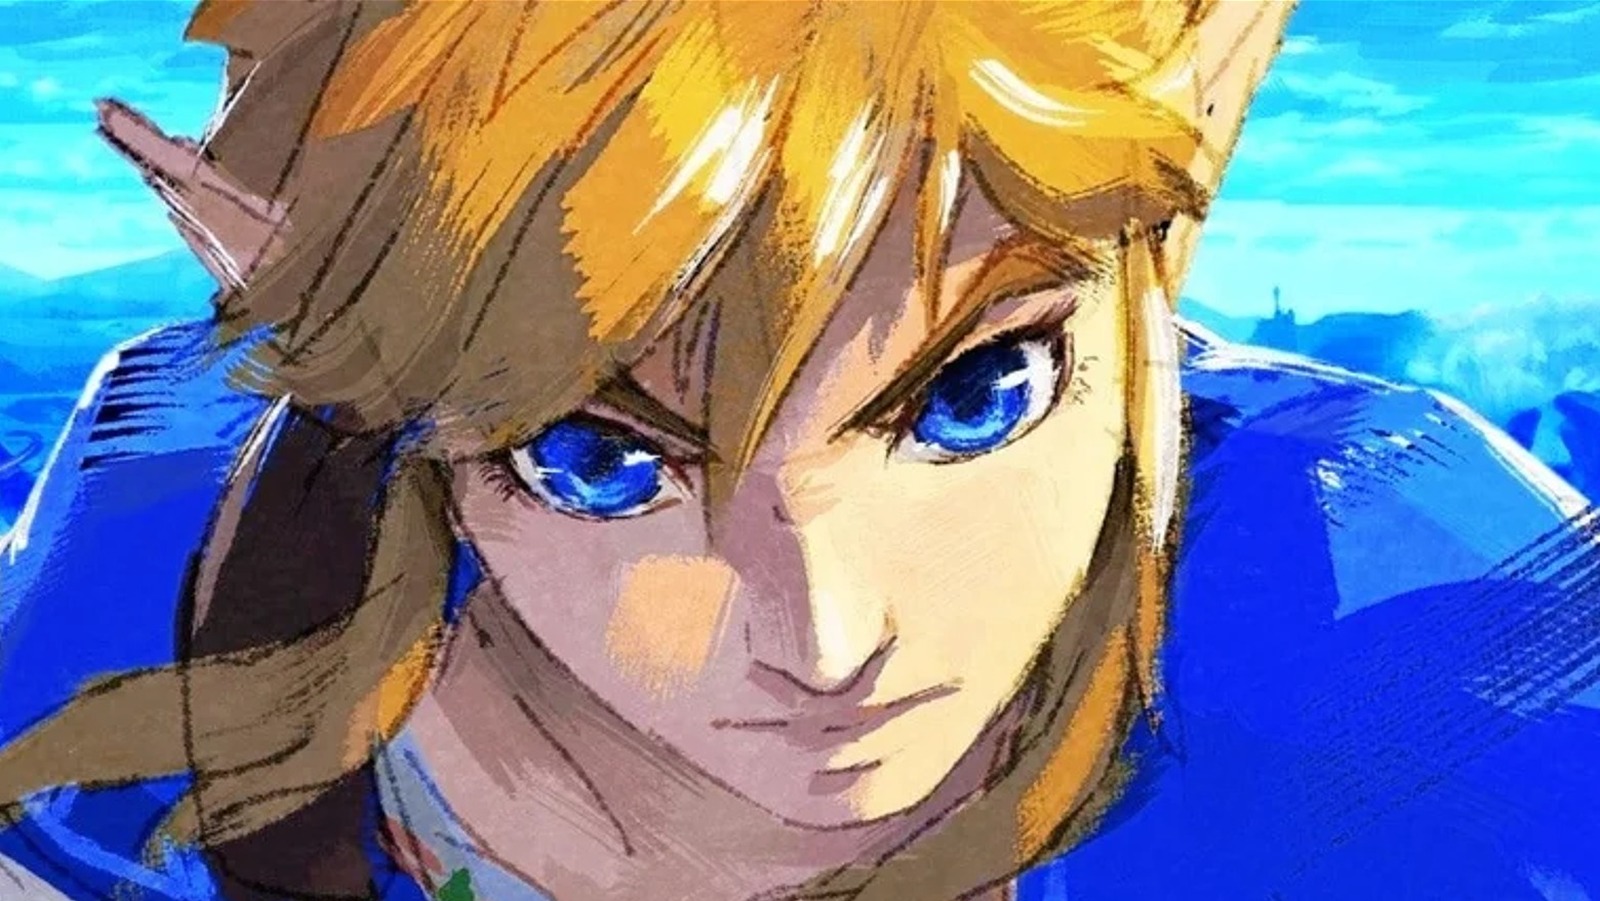 Zelda: Breath of the Wild 2 is a Challenging Task for Nintendo